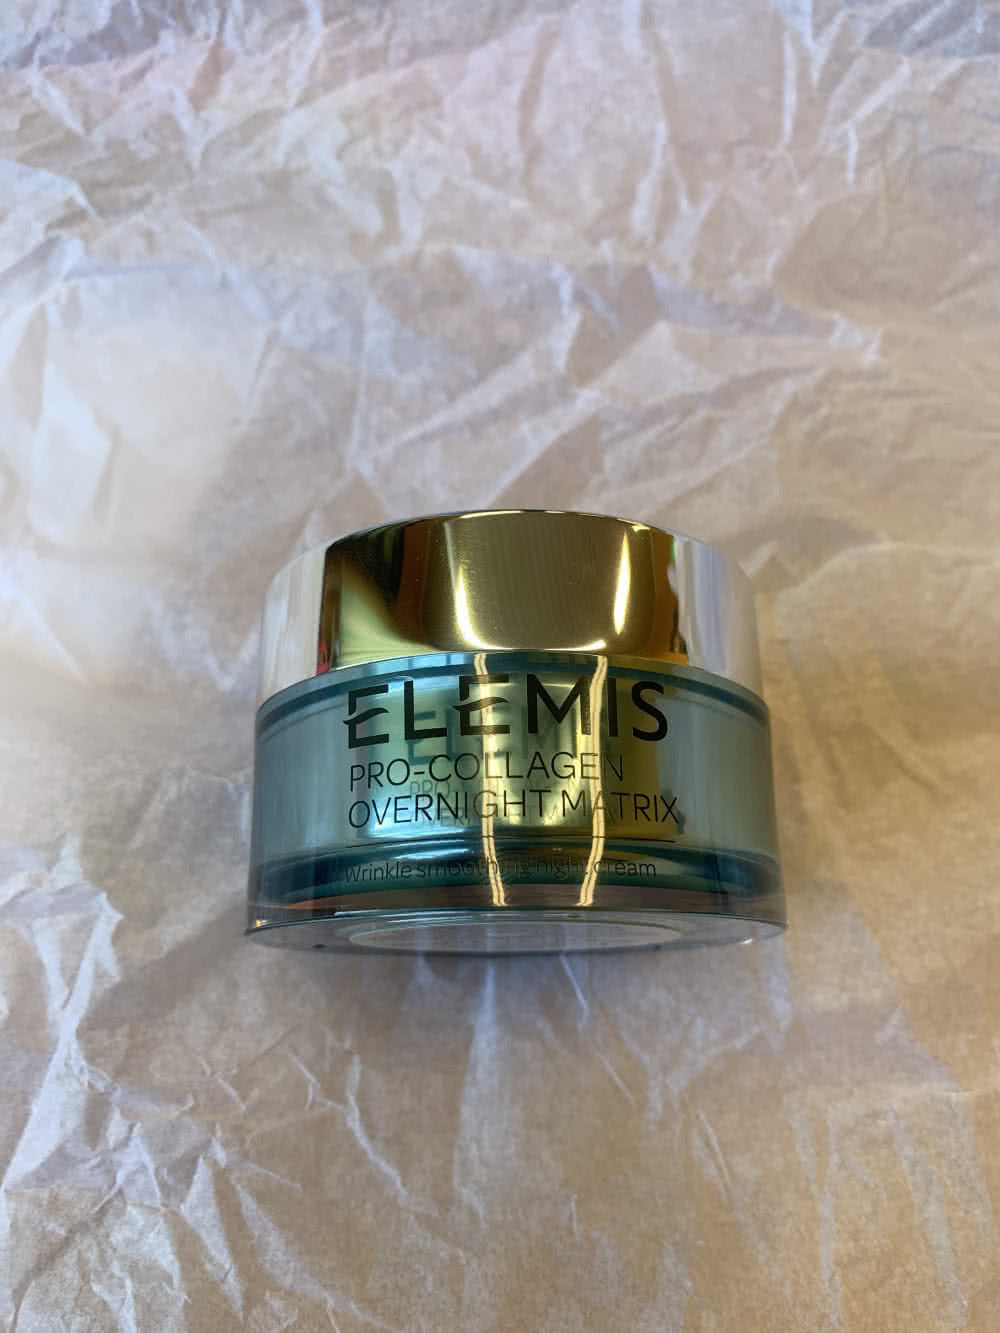 Elemis, Pro-Collagen Overnight Matrix Night Cream, 50ml